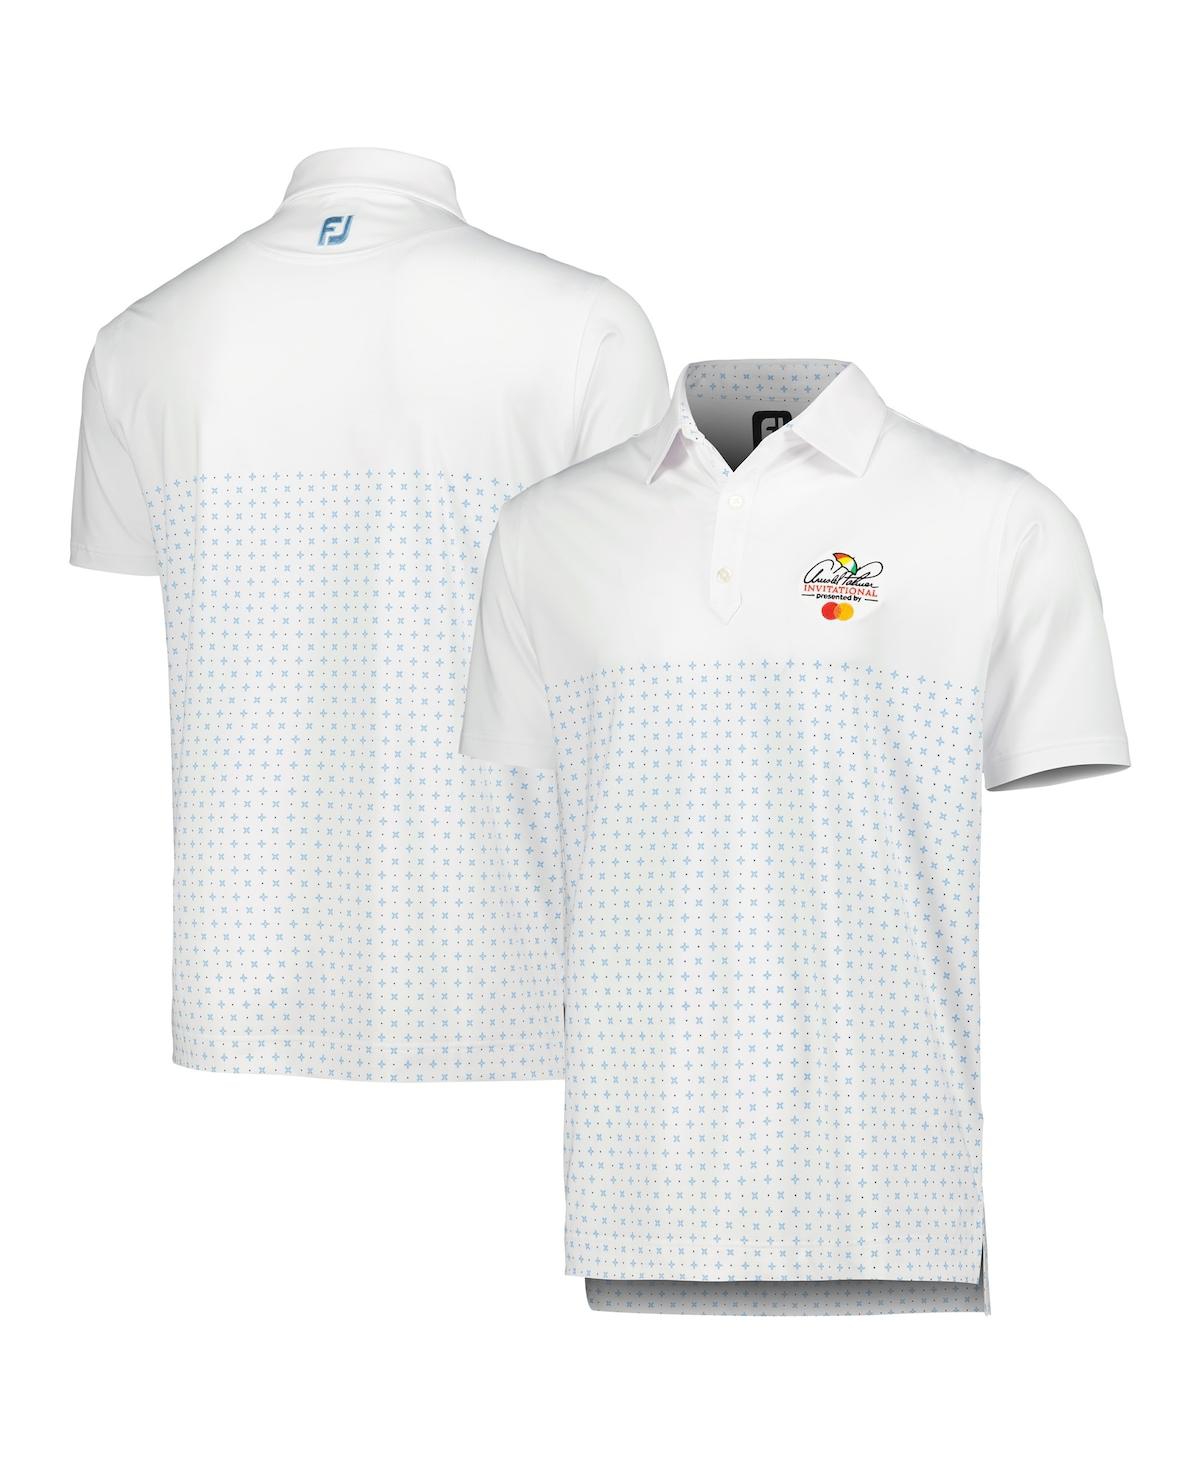 Shop Footjoy Men's  White Arnold Palmer Invitational Engineered Foulard Lisle Polo Shirt